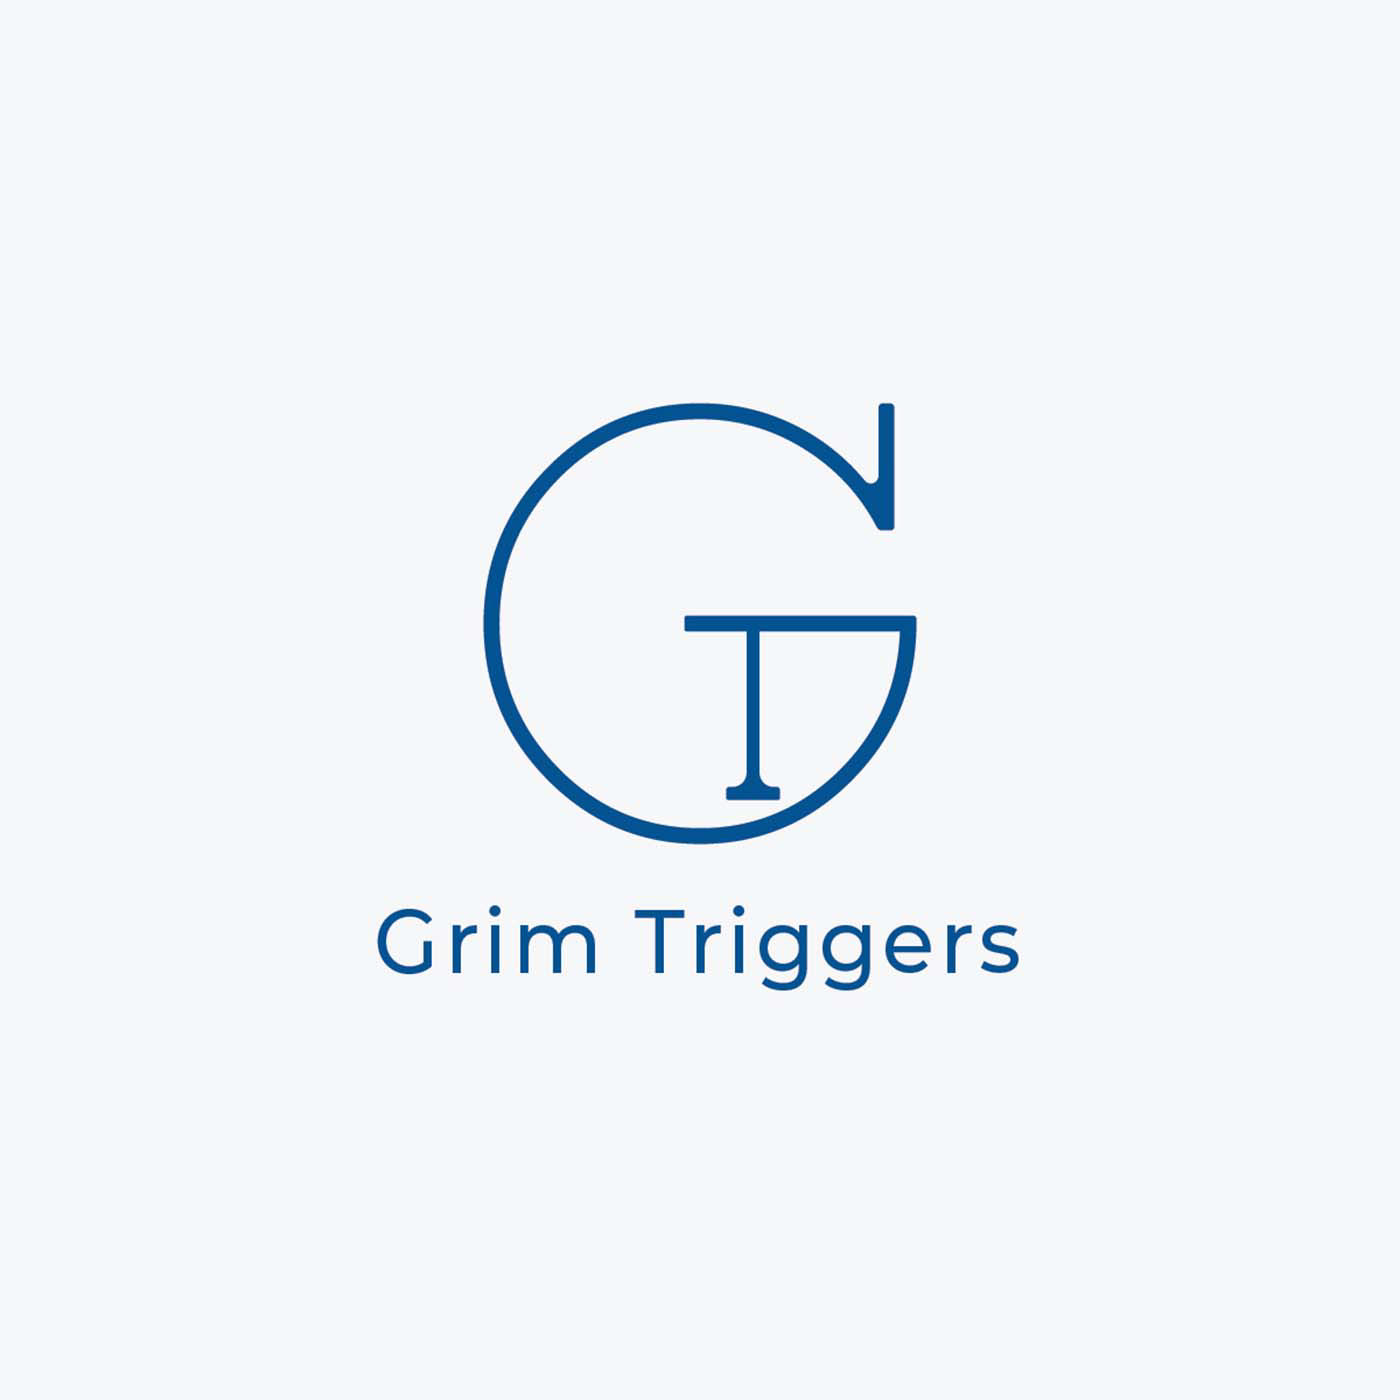 Brand Design brand identity branding  Fighter graphic design  grim Gun guns Logo Design trigger